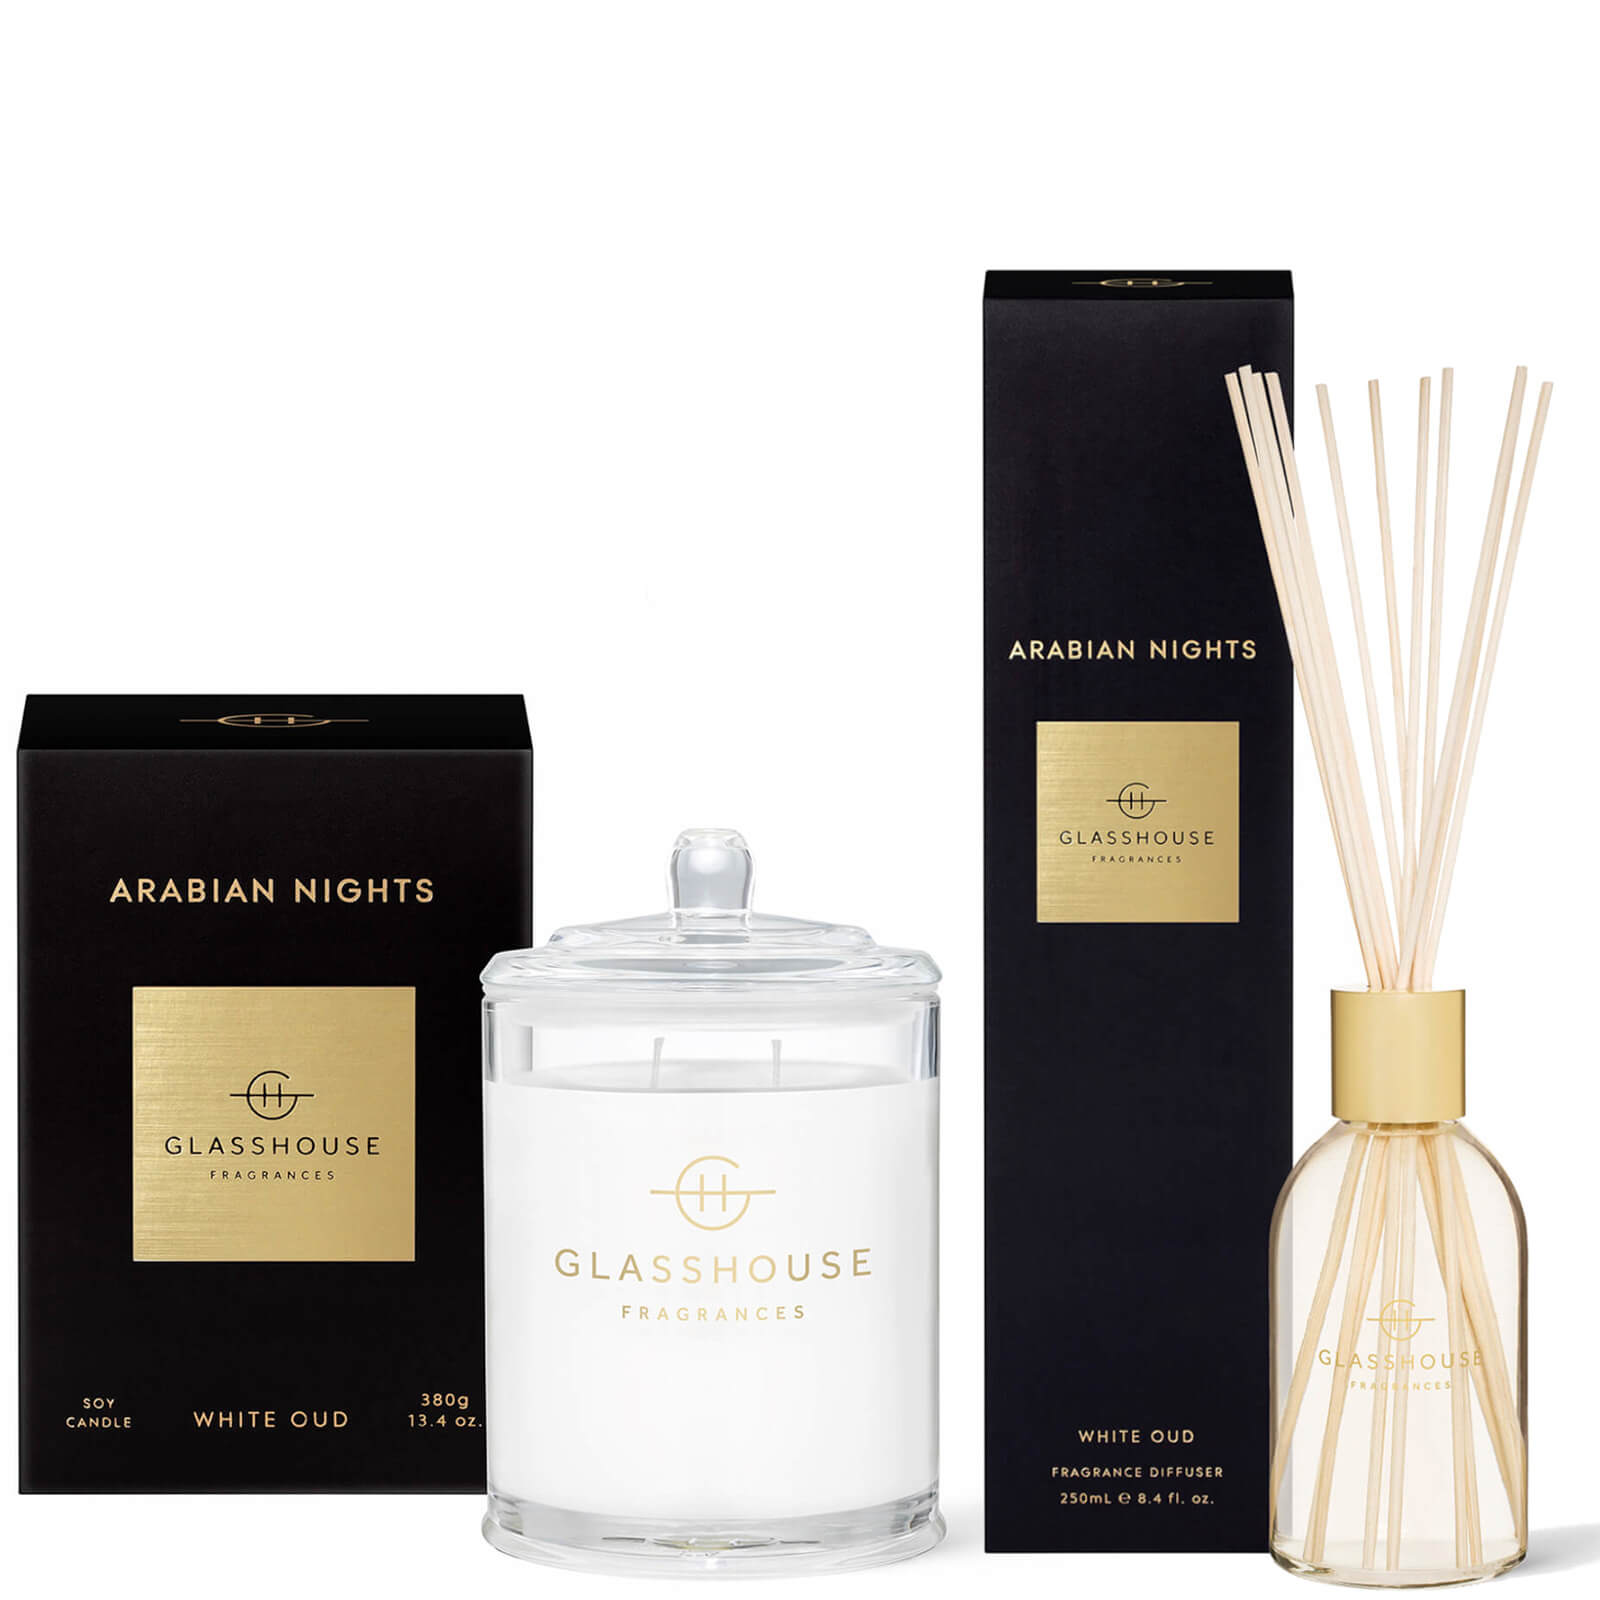 Glasshouse Fragrances Glasshouse Arabian Nights Candle and Liquid Diffuser